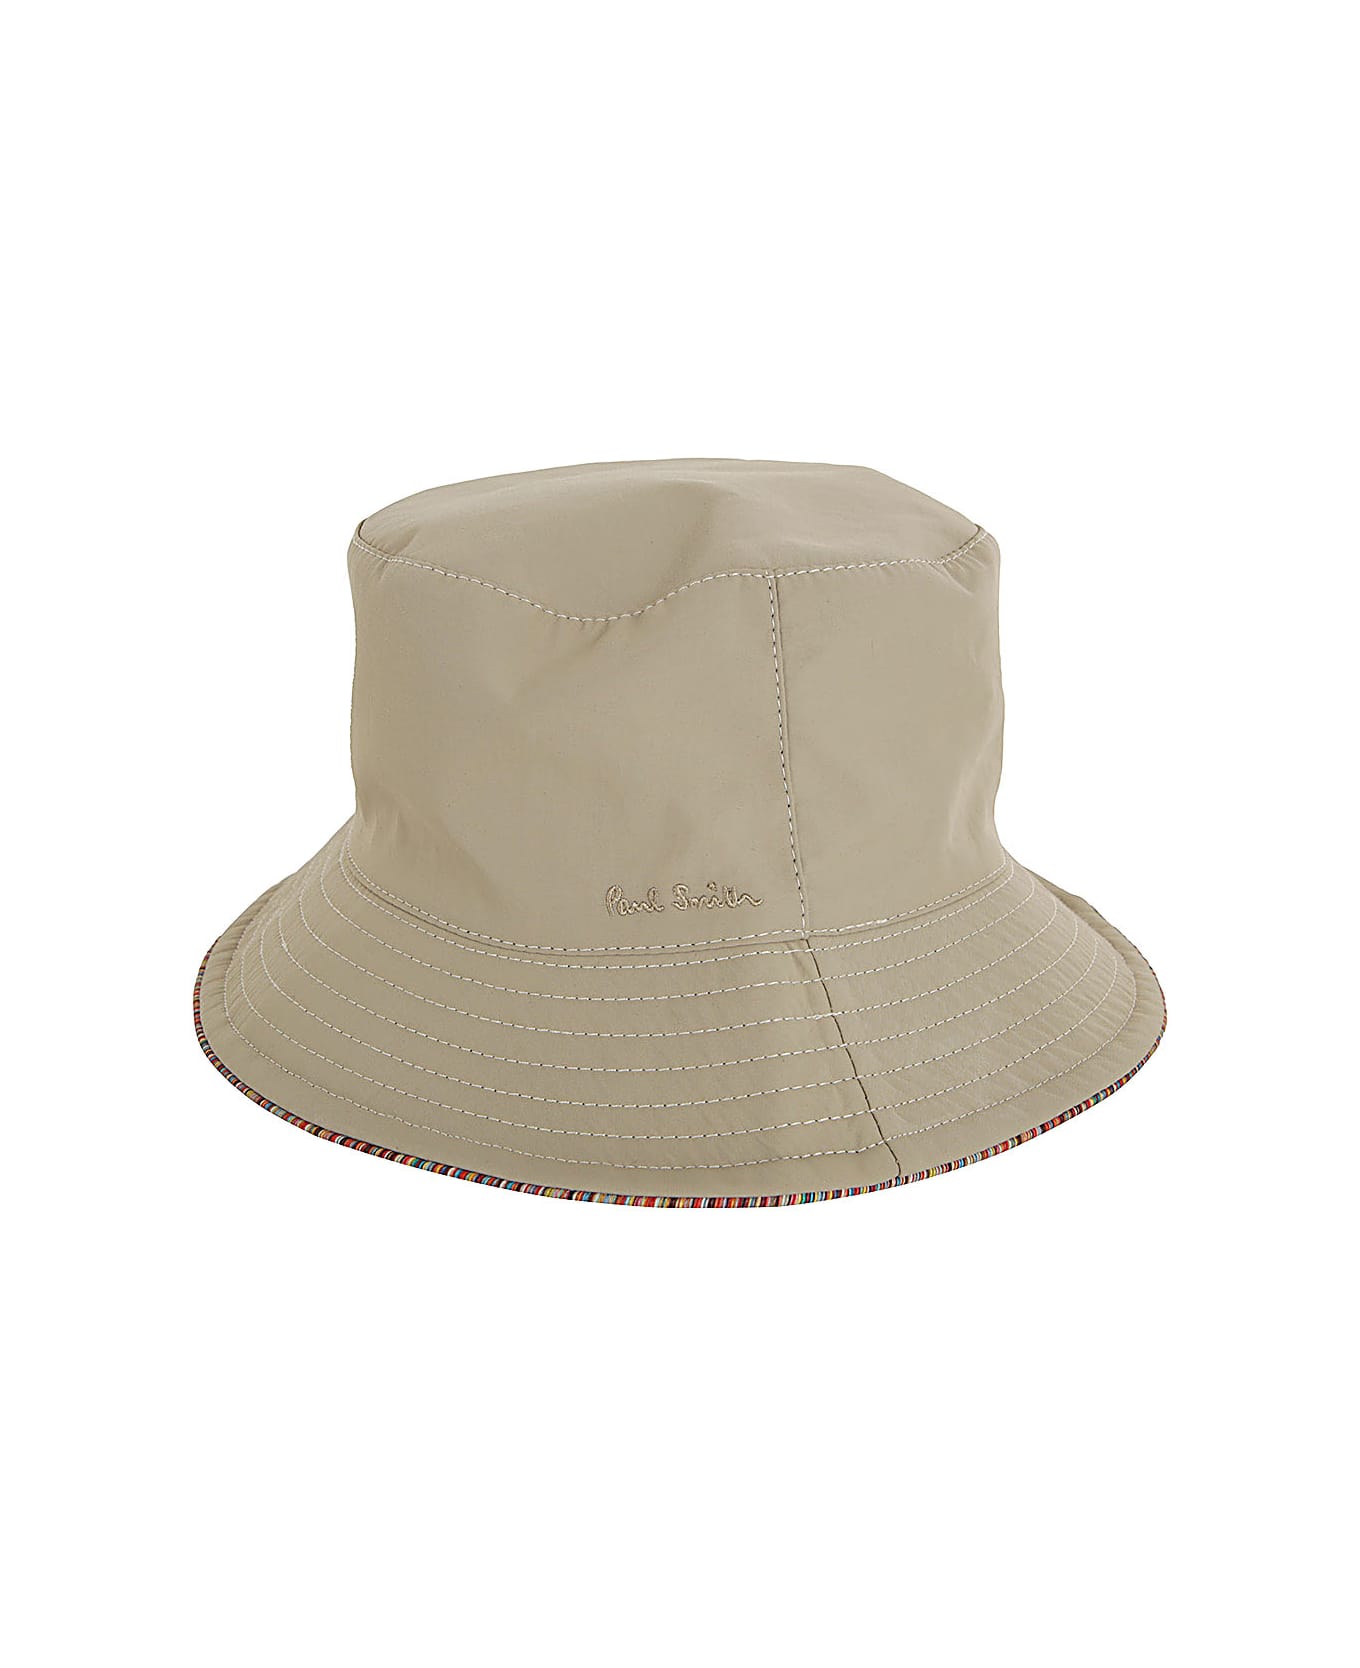 Paul Smith Bucket Hat - Khaki